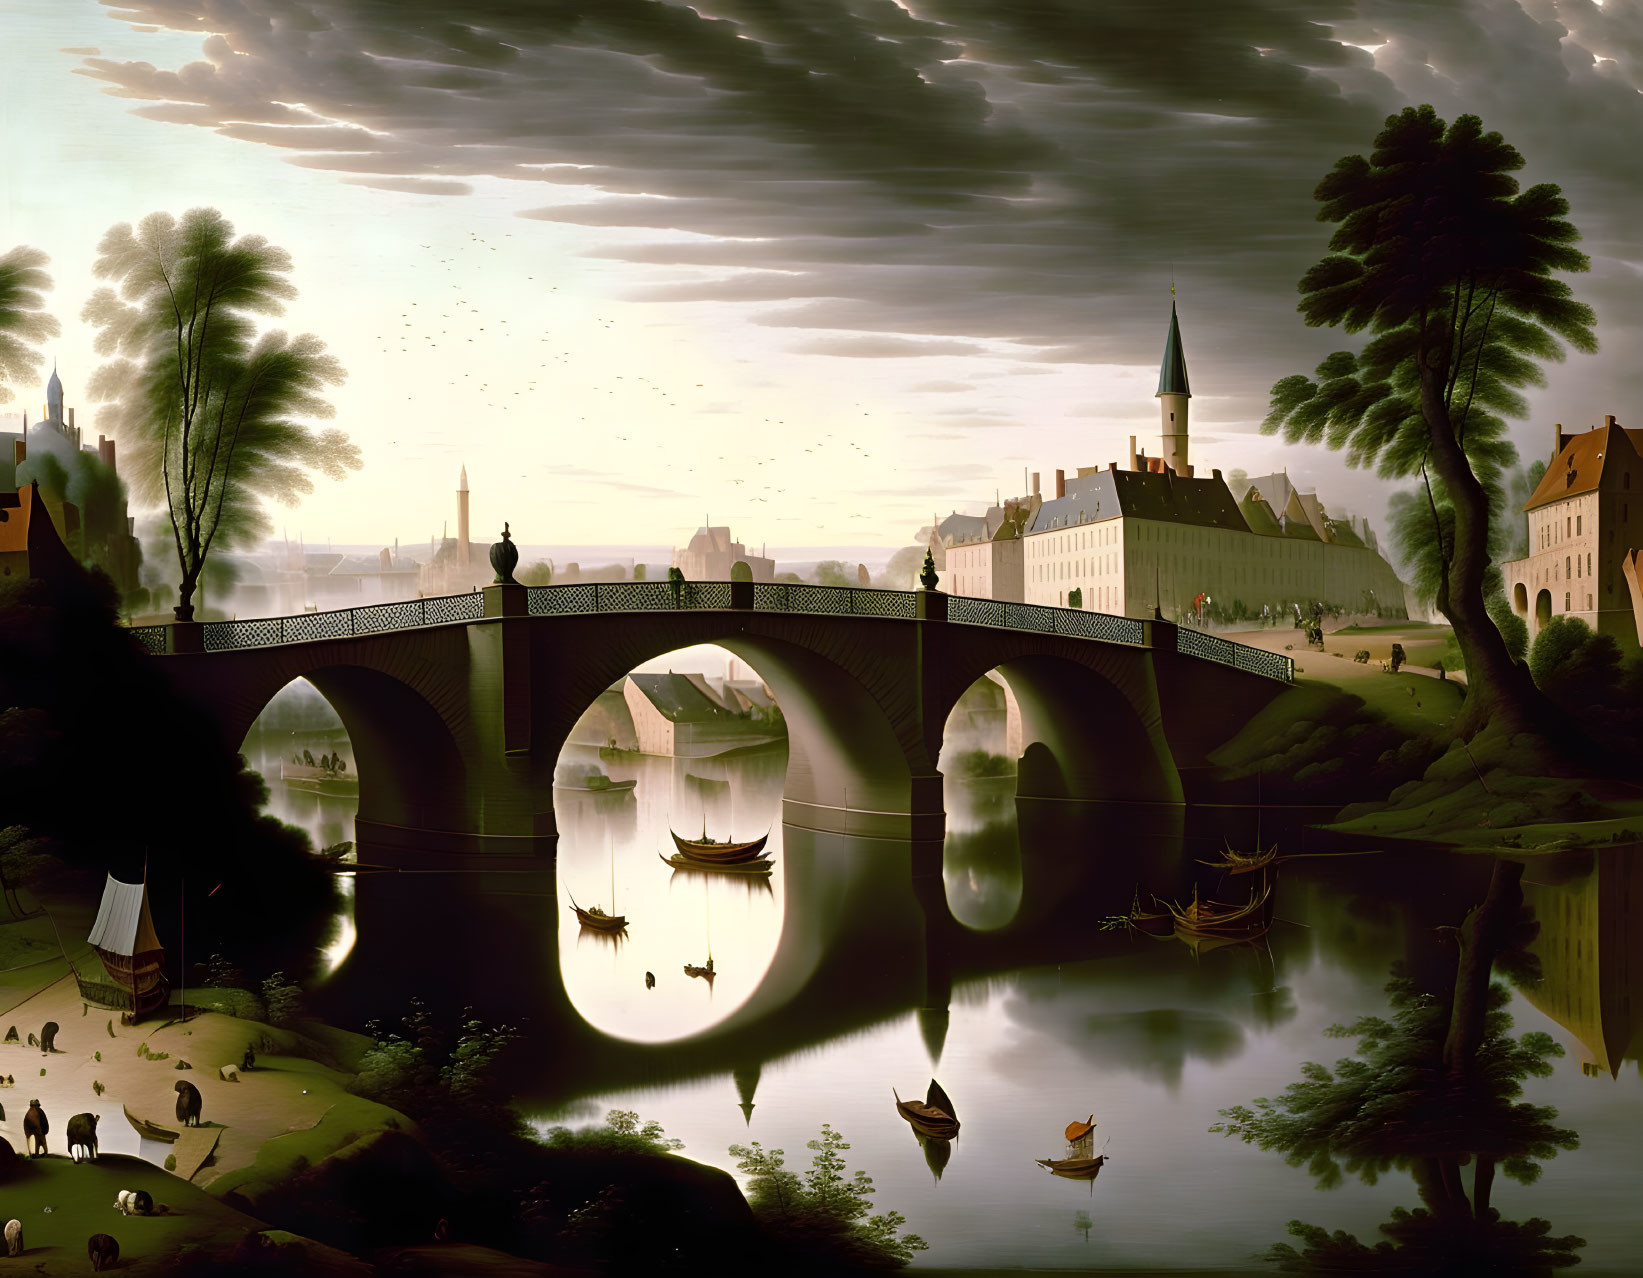 River near a city. 19th century 